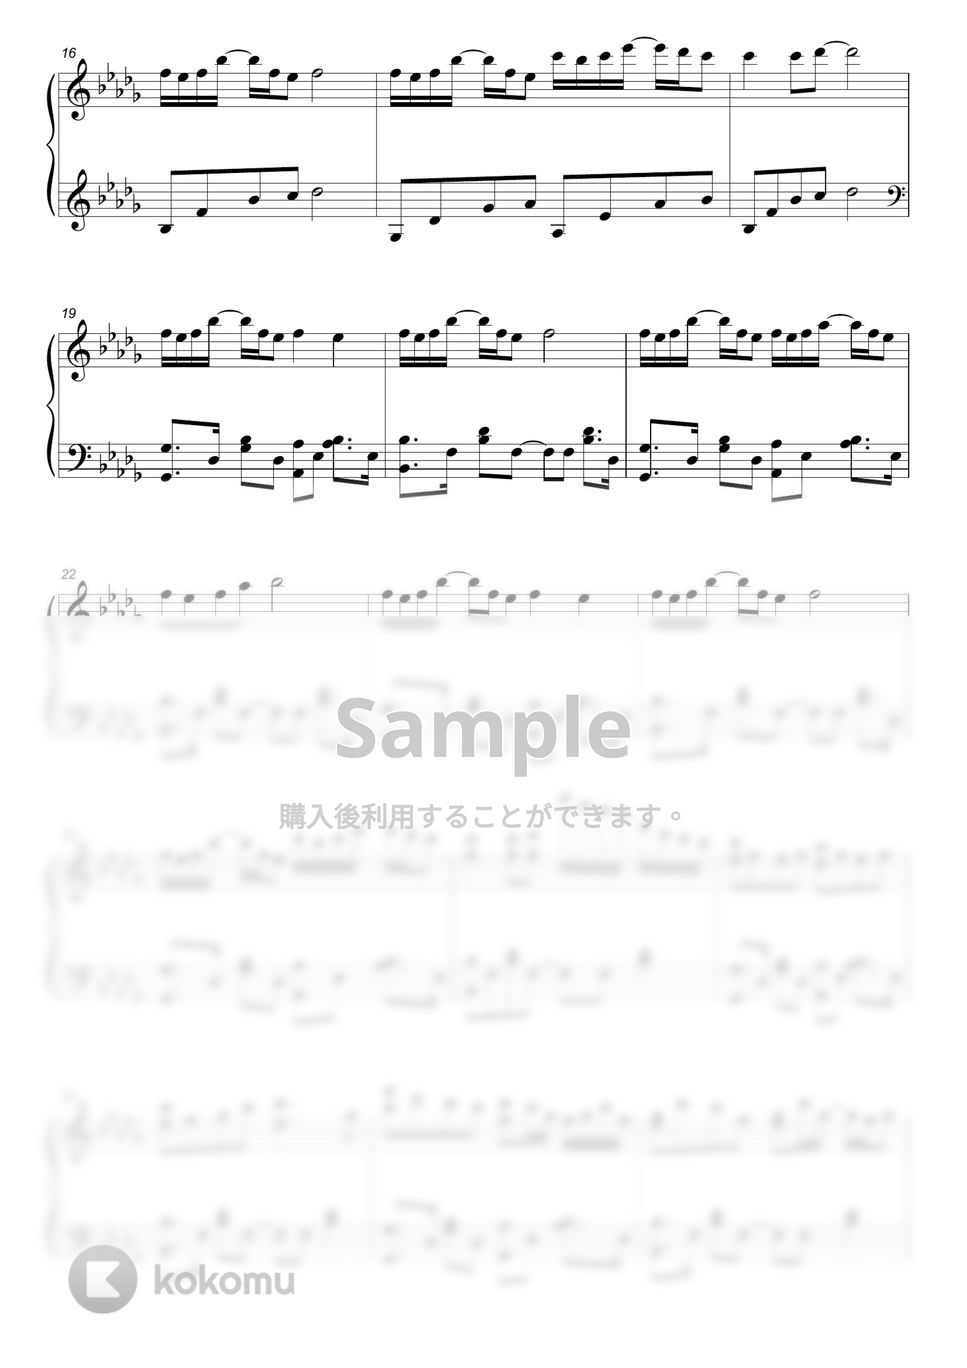 DJ Okawari - Luv Letter (PIANO COVER) by HANPPYEOMPIANO